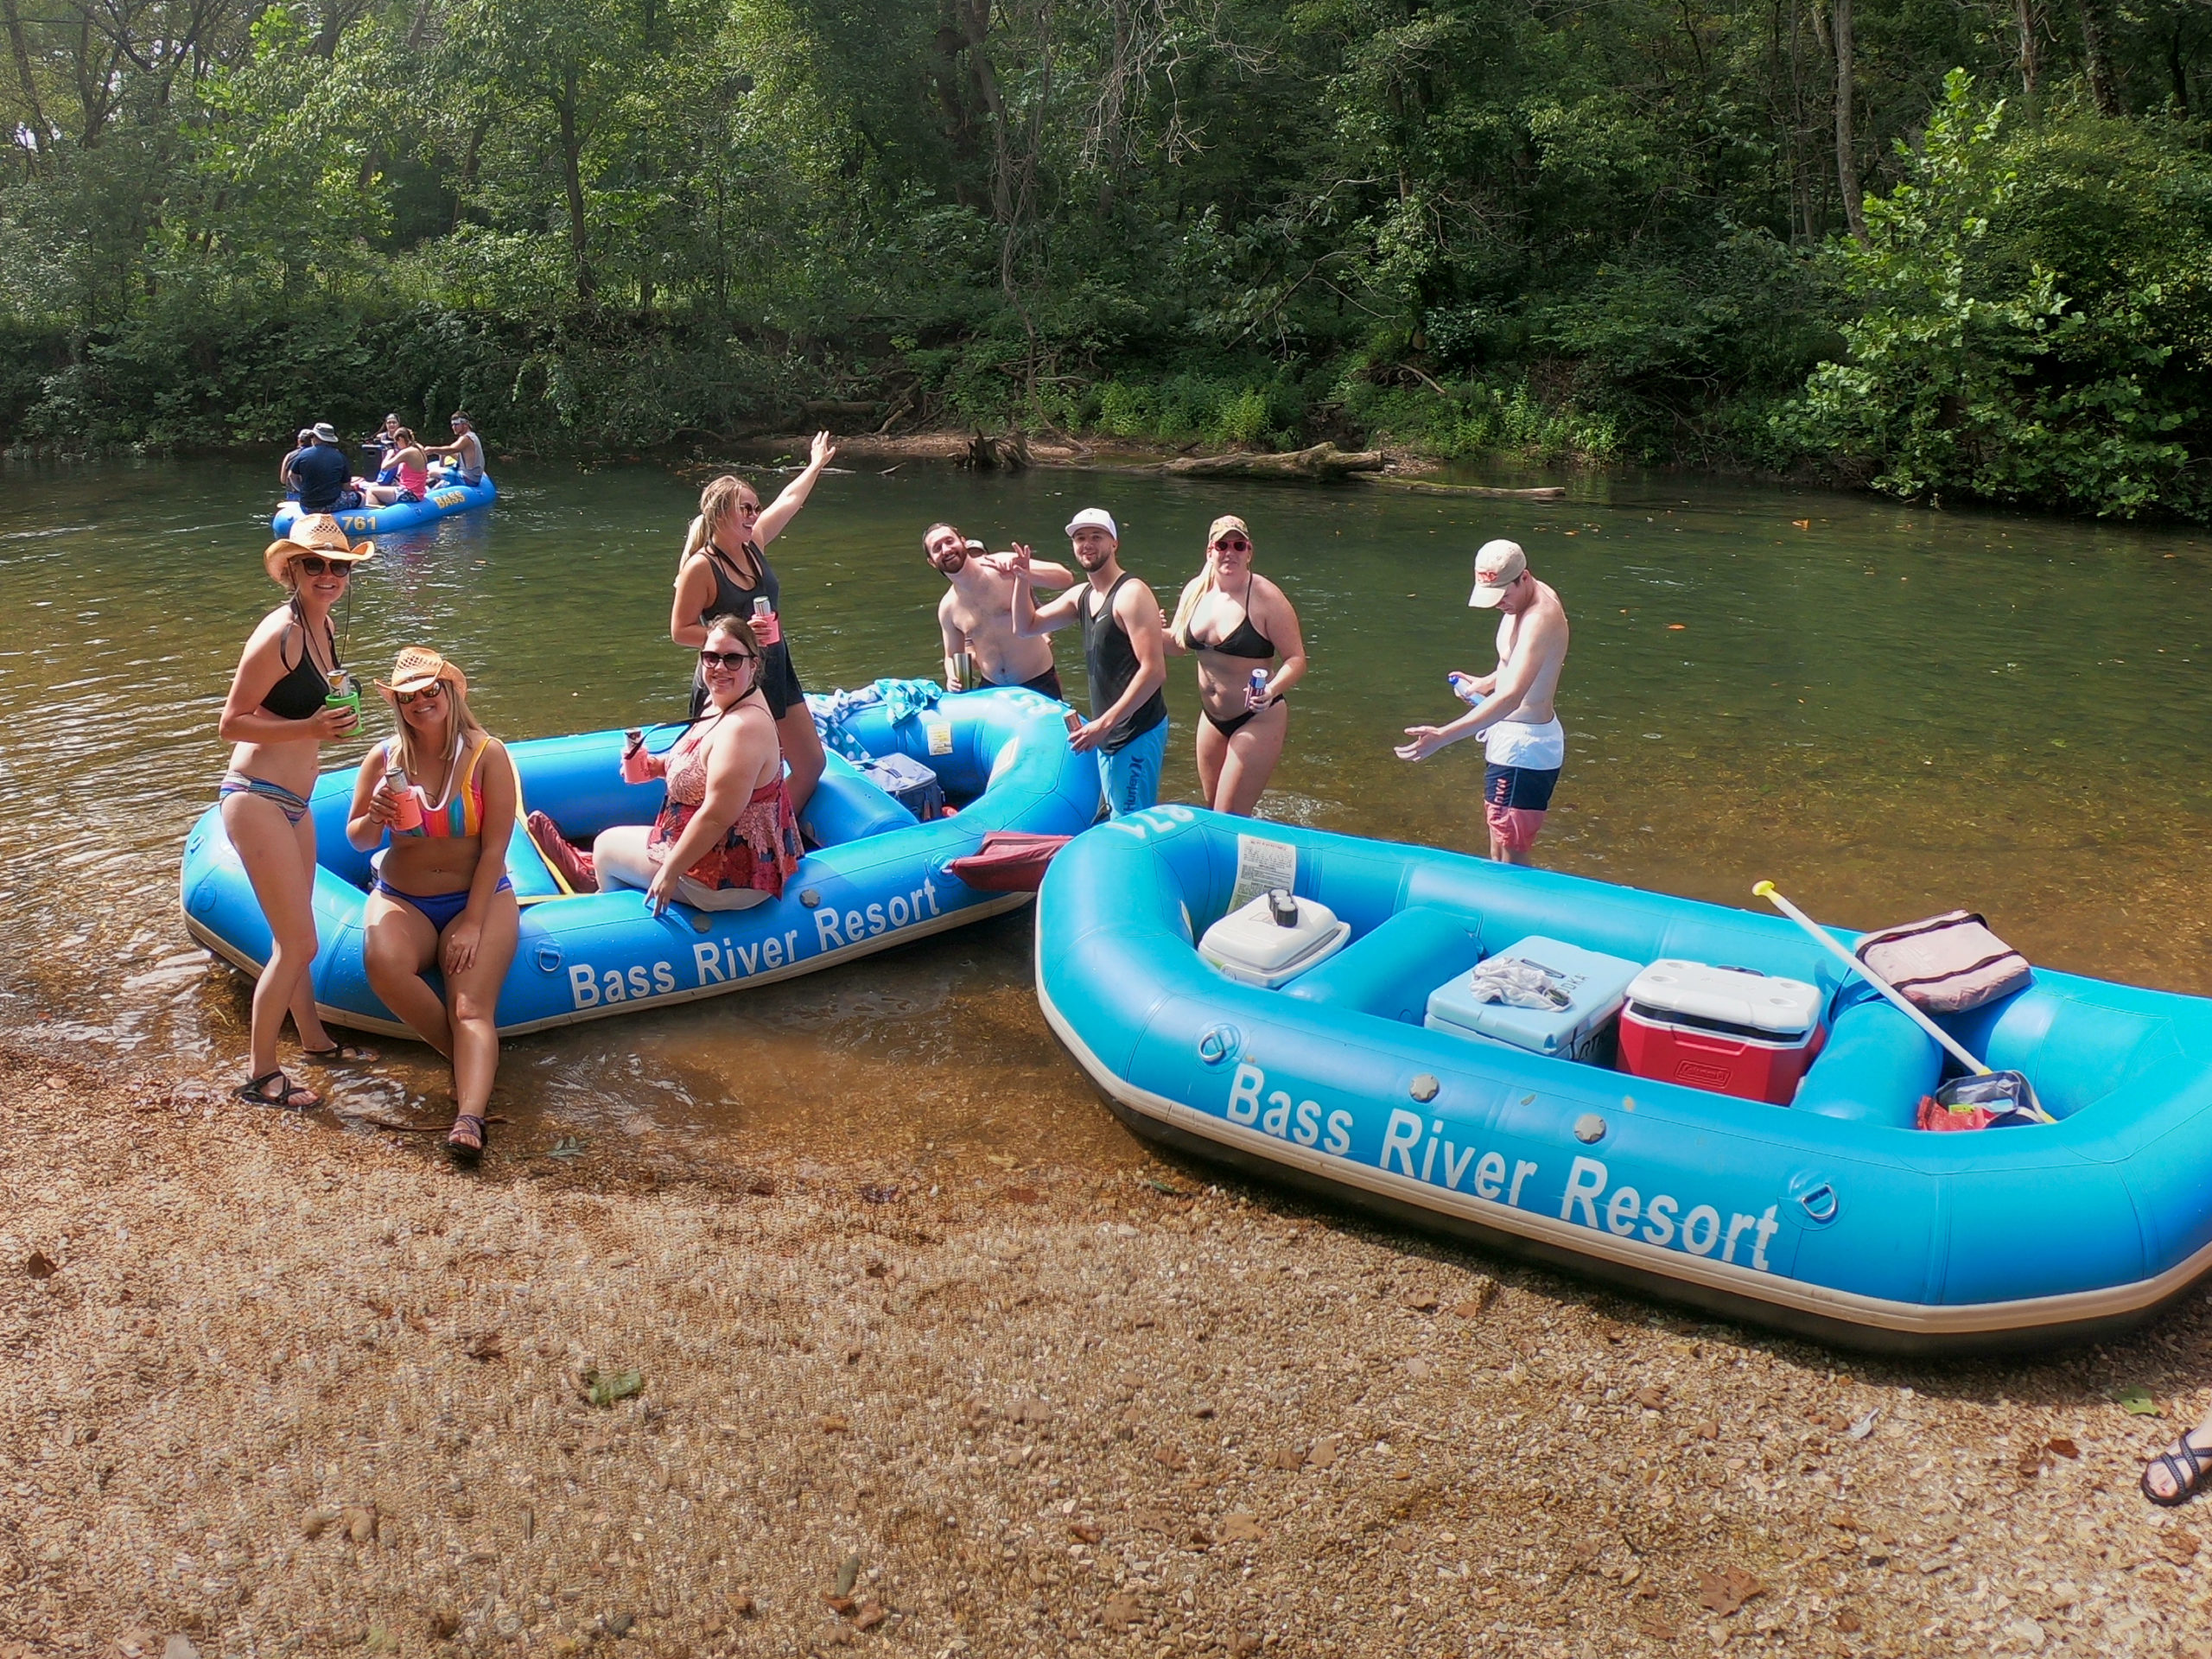 Meramec River Rafting Trips & Rentals in Missouri